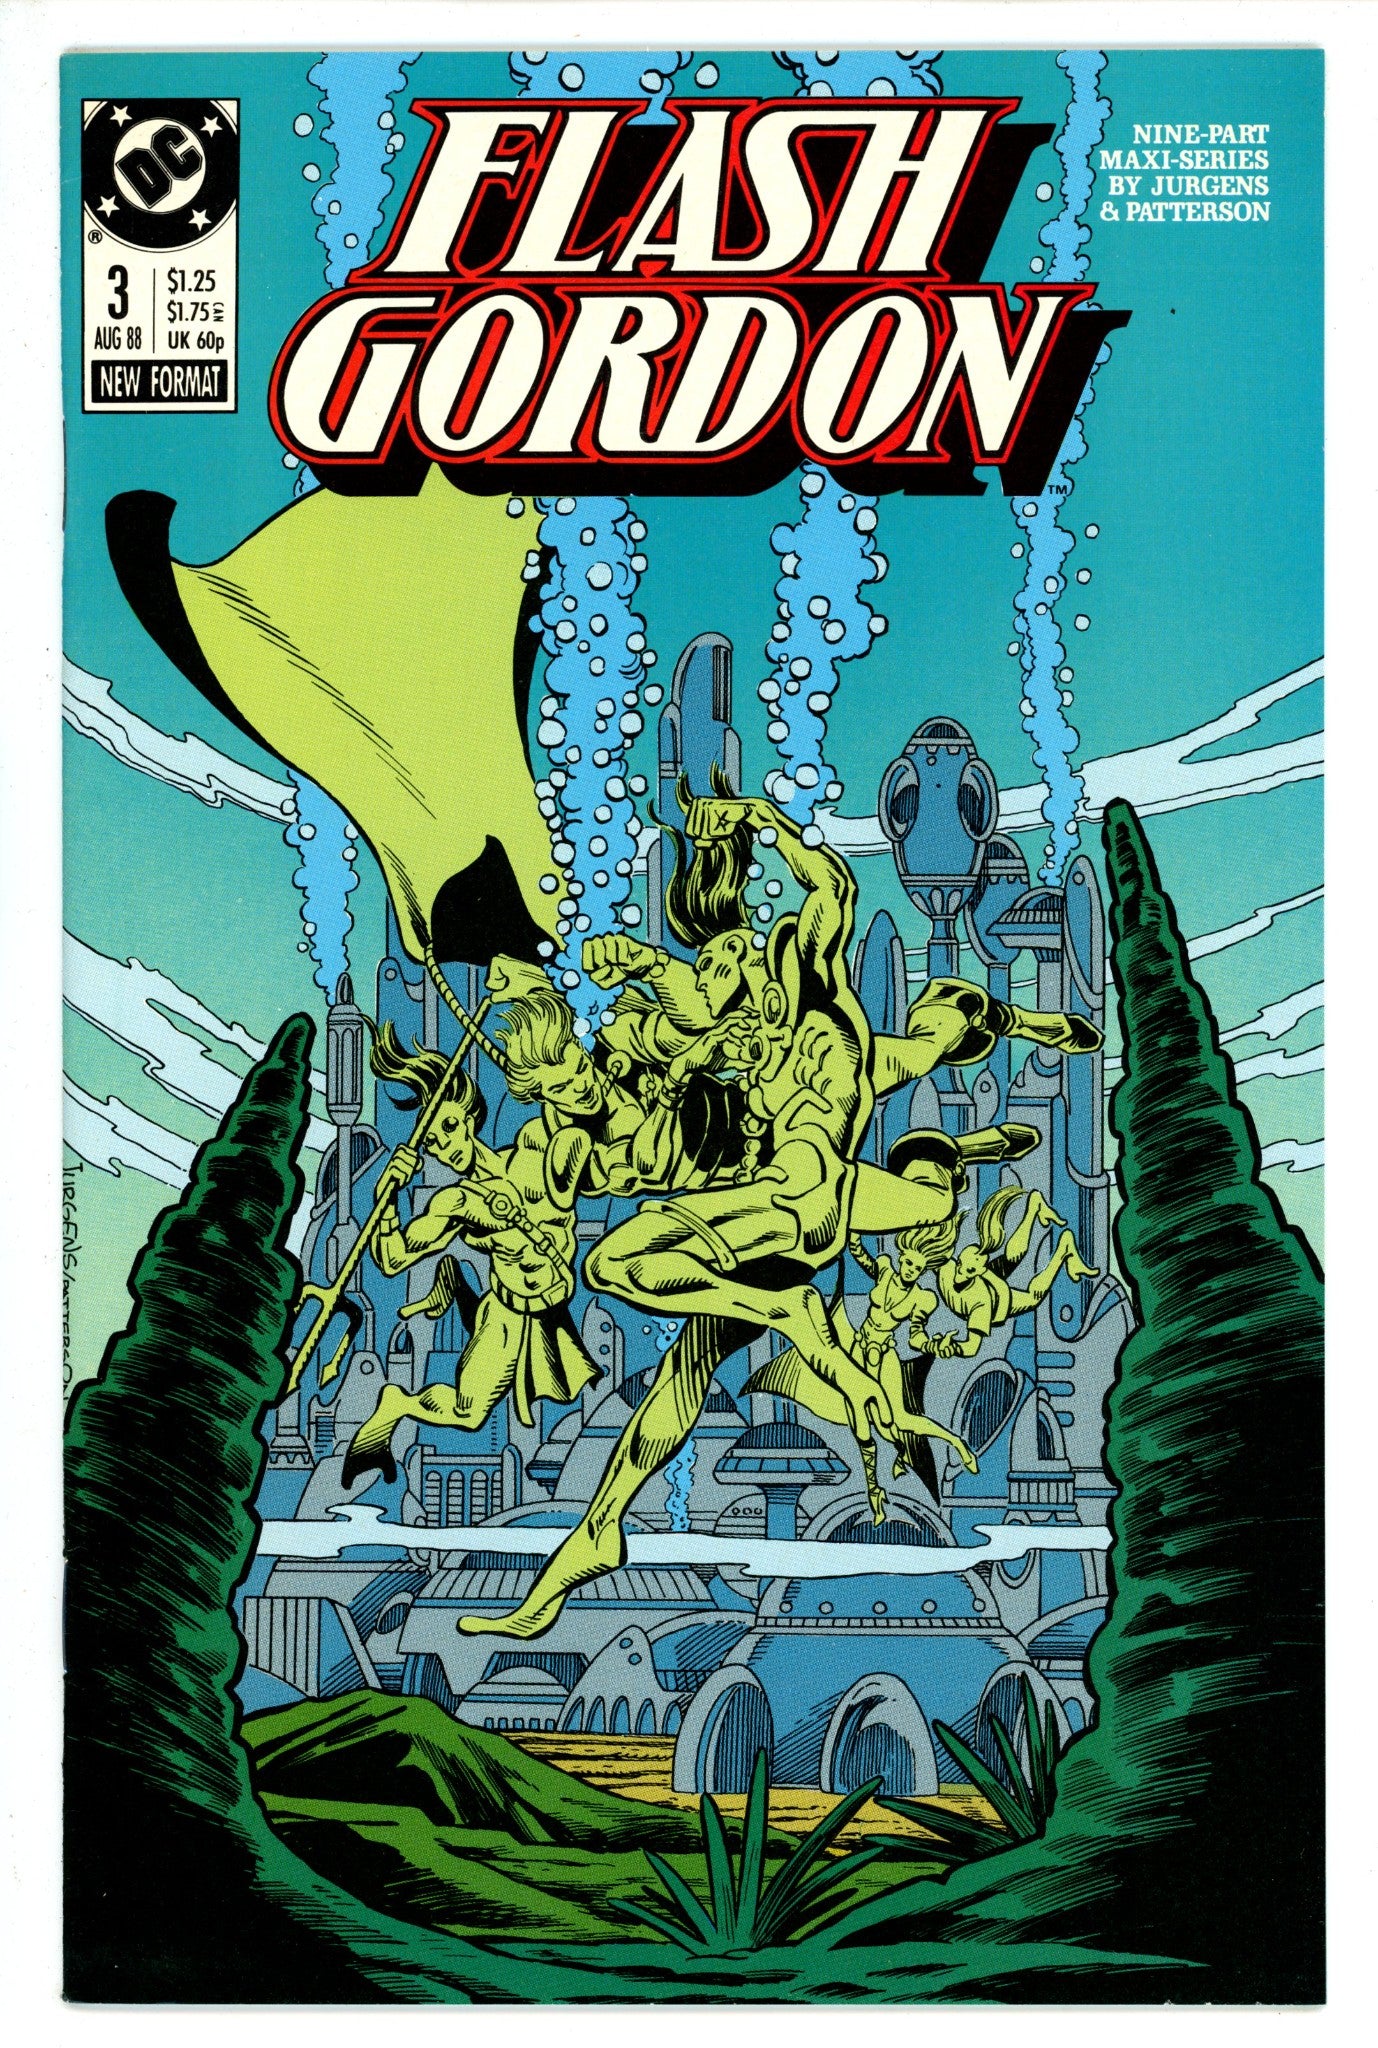 Flash Gordon Vol 3 3 (1988)